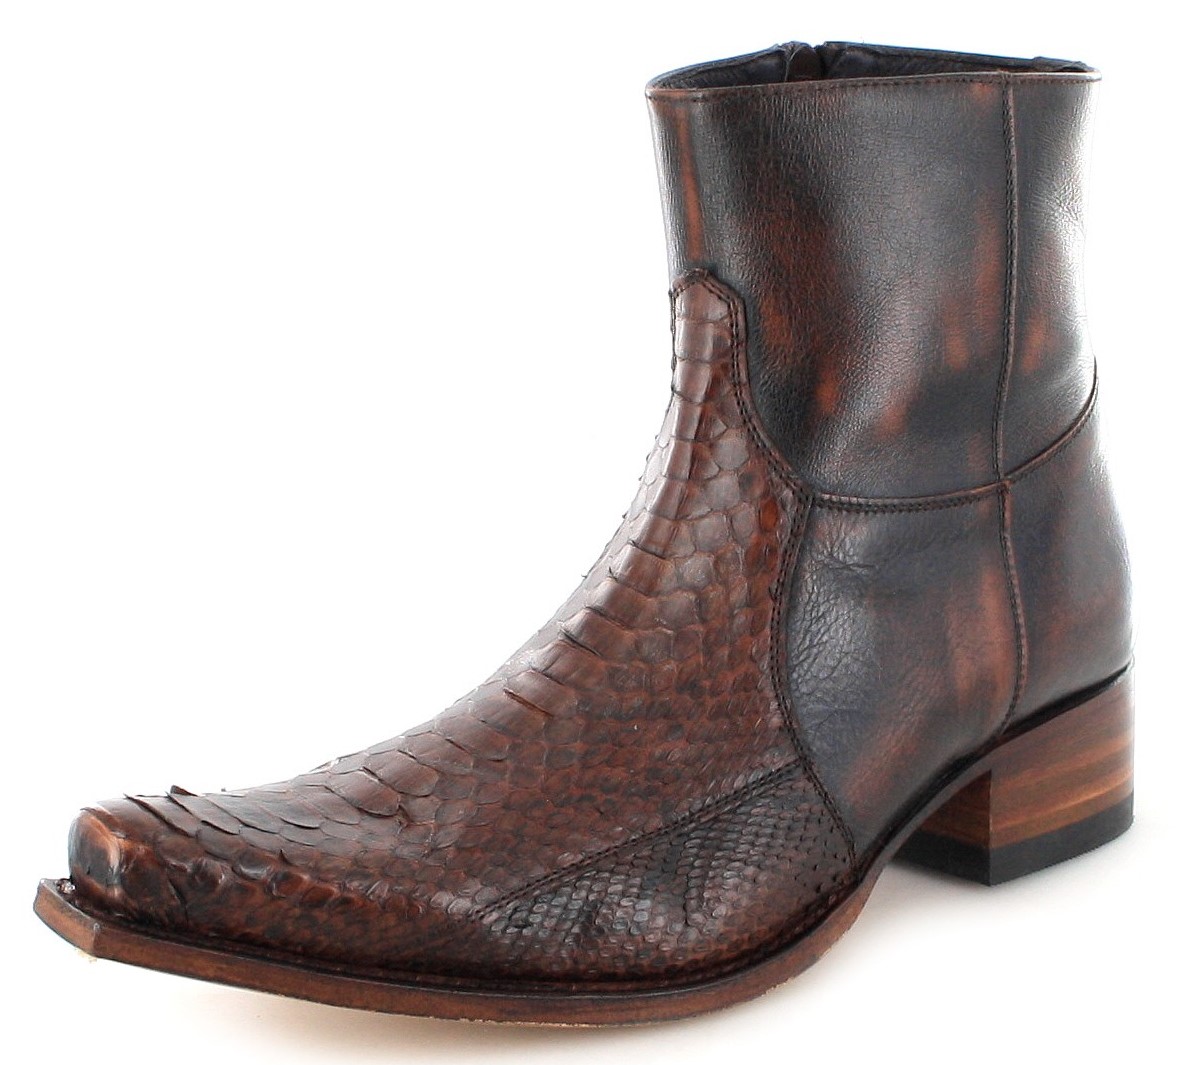 molen Algemeen veteraan Official store discount | Sendra Boots 5701P Jacinto Fashion Exotic ankle  boot - dark brown Online Sales Up 69%